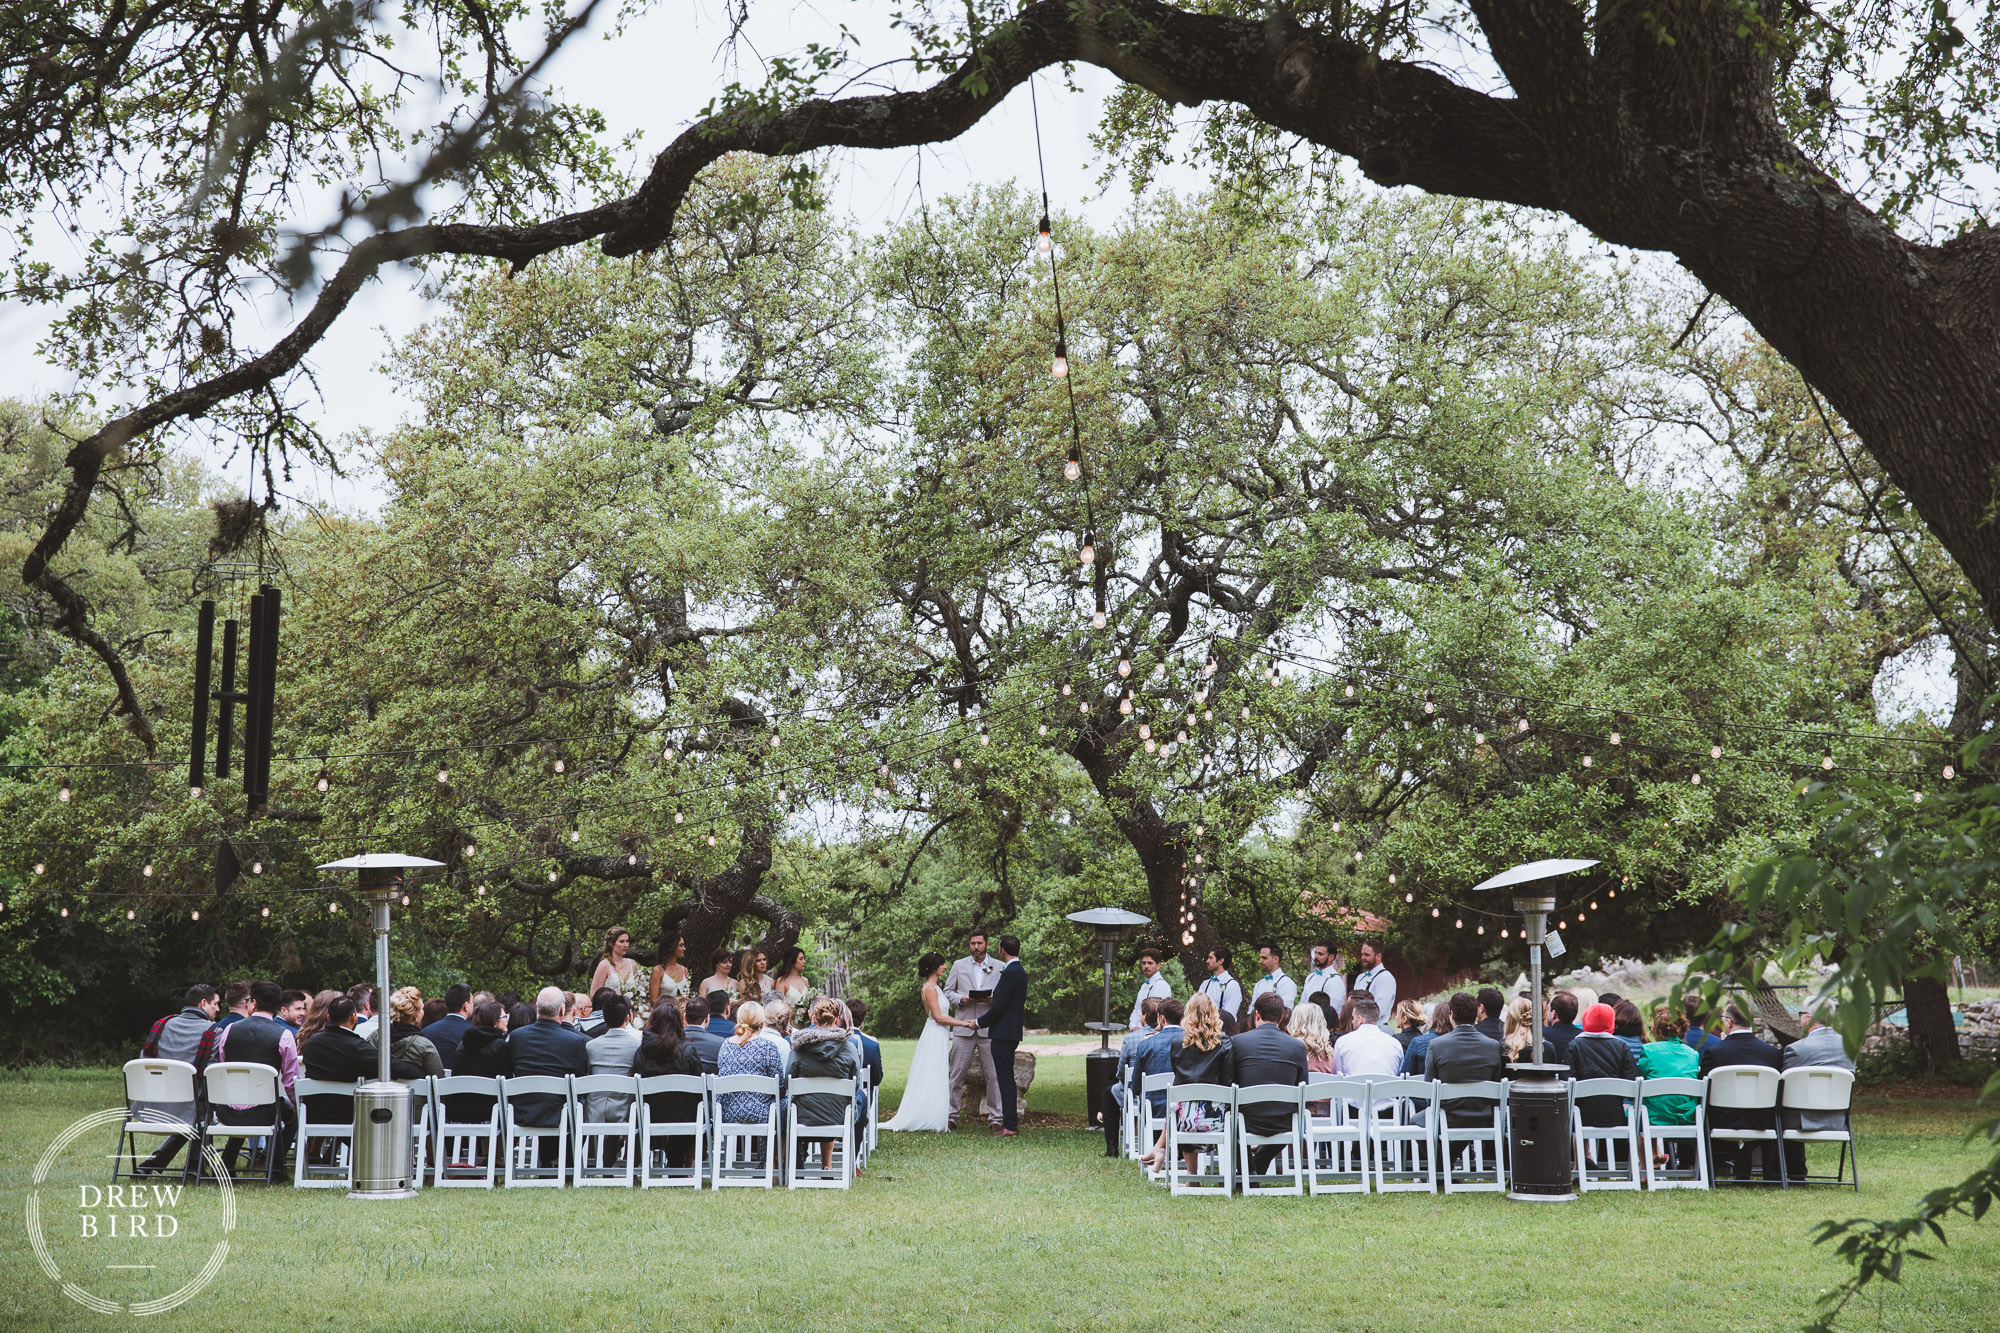 Wedding ceremony under trees at rustic texas ranch. Austin Texas ranch wedding. Travel and destination wedding photographer Drew Bird.